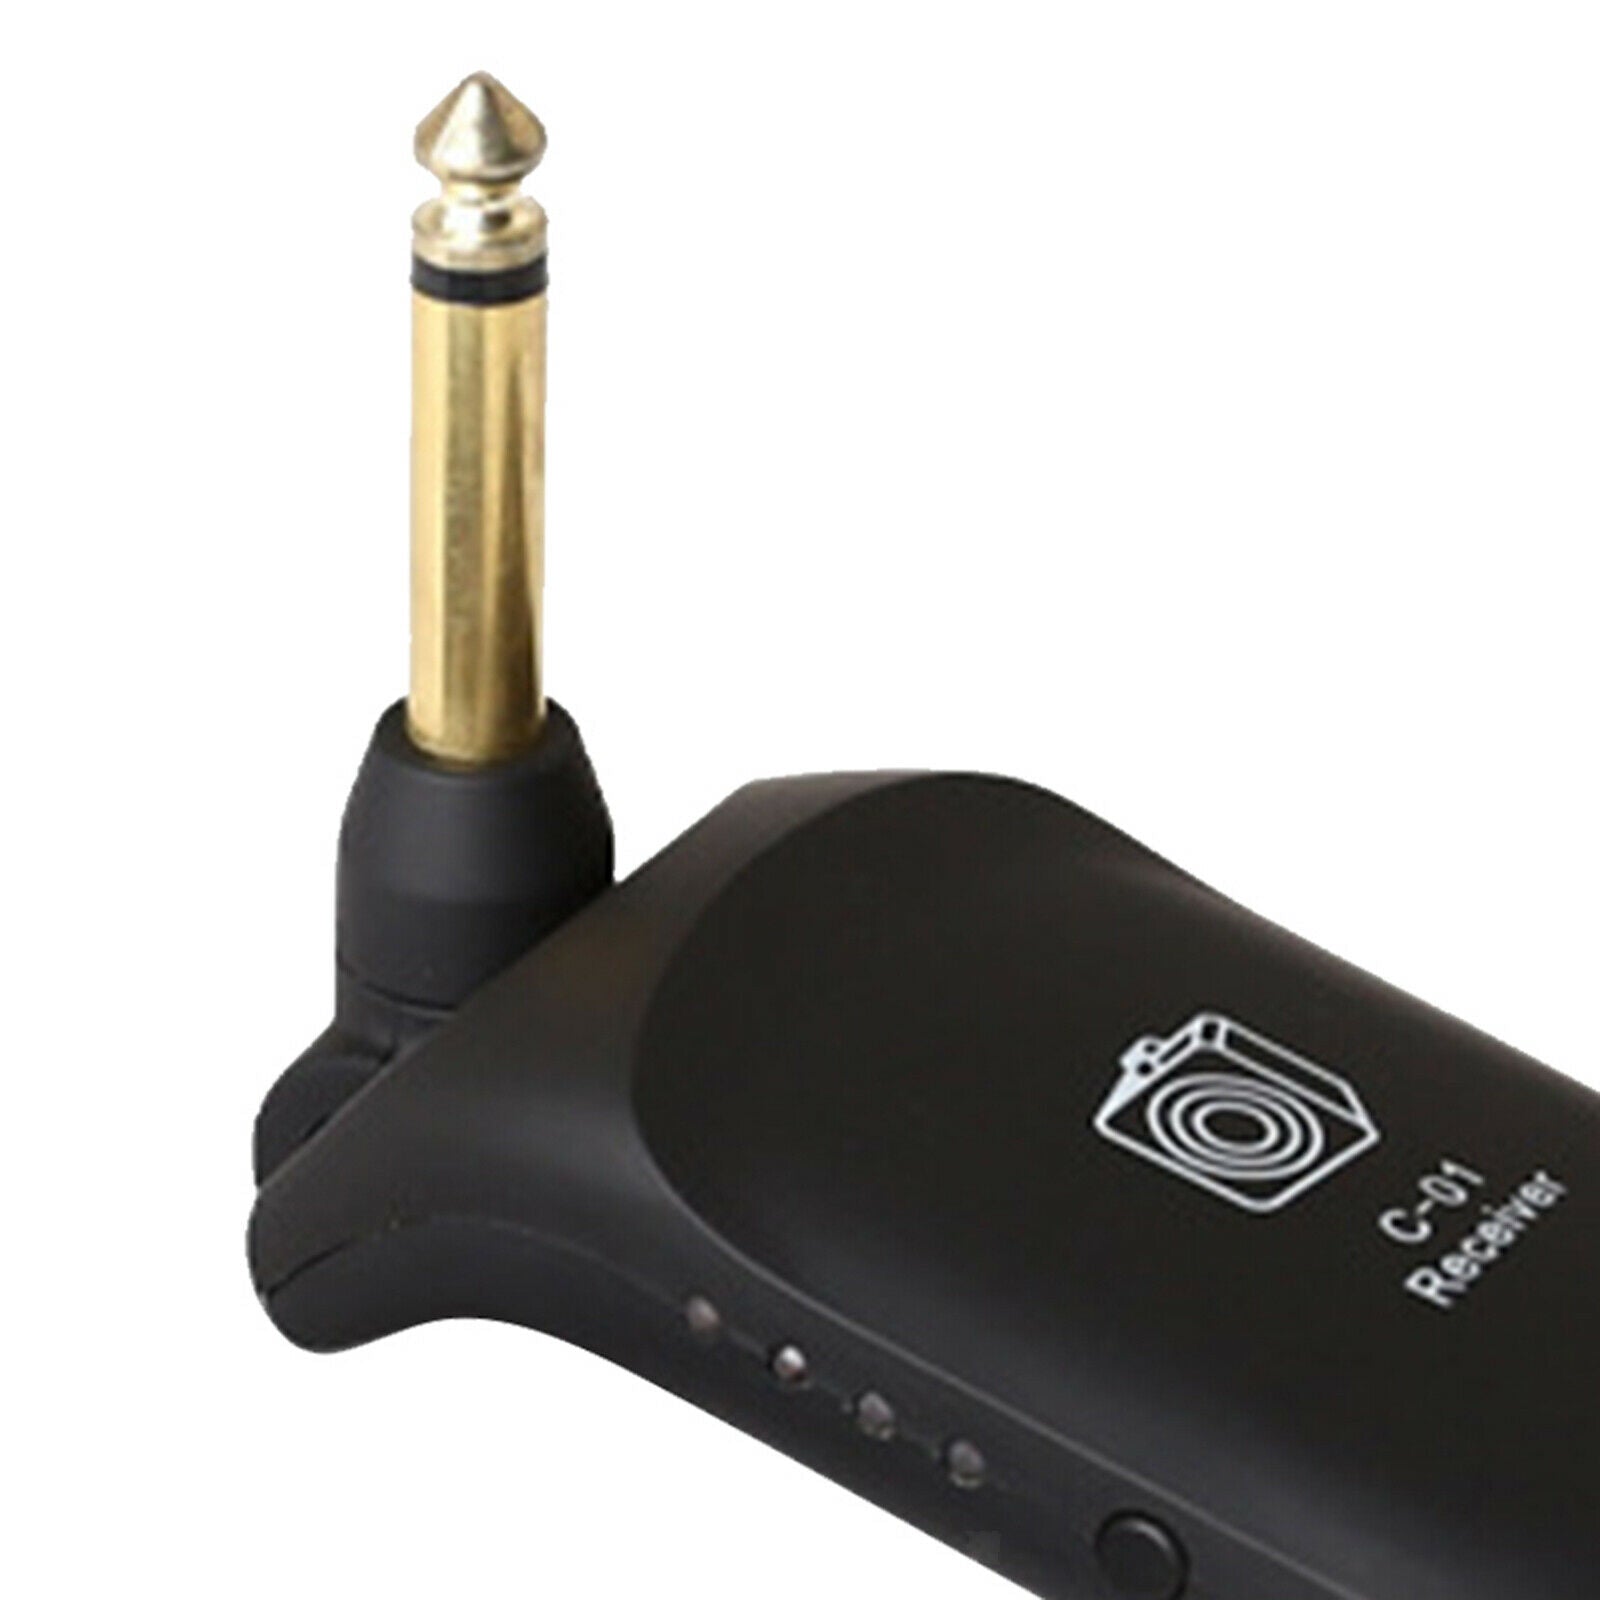 Guitar Wireless Guitar Transmitter Receiver Guitar Parts Black 43x17x110mm